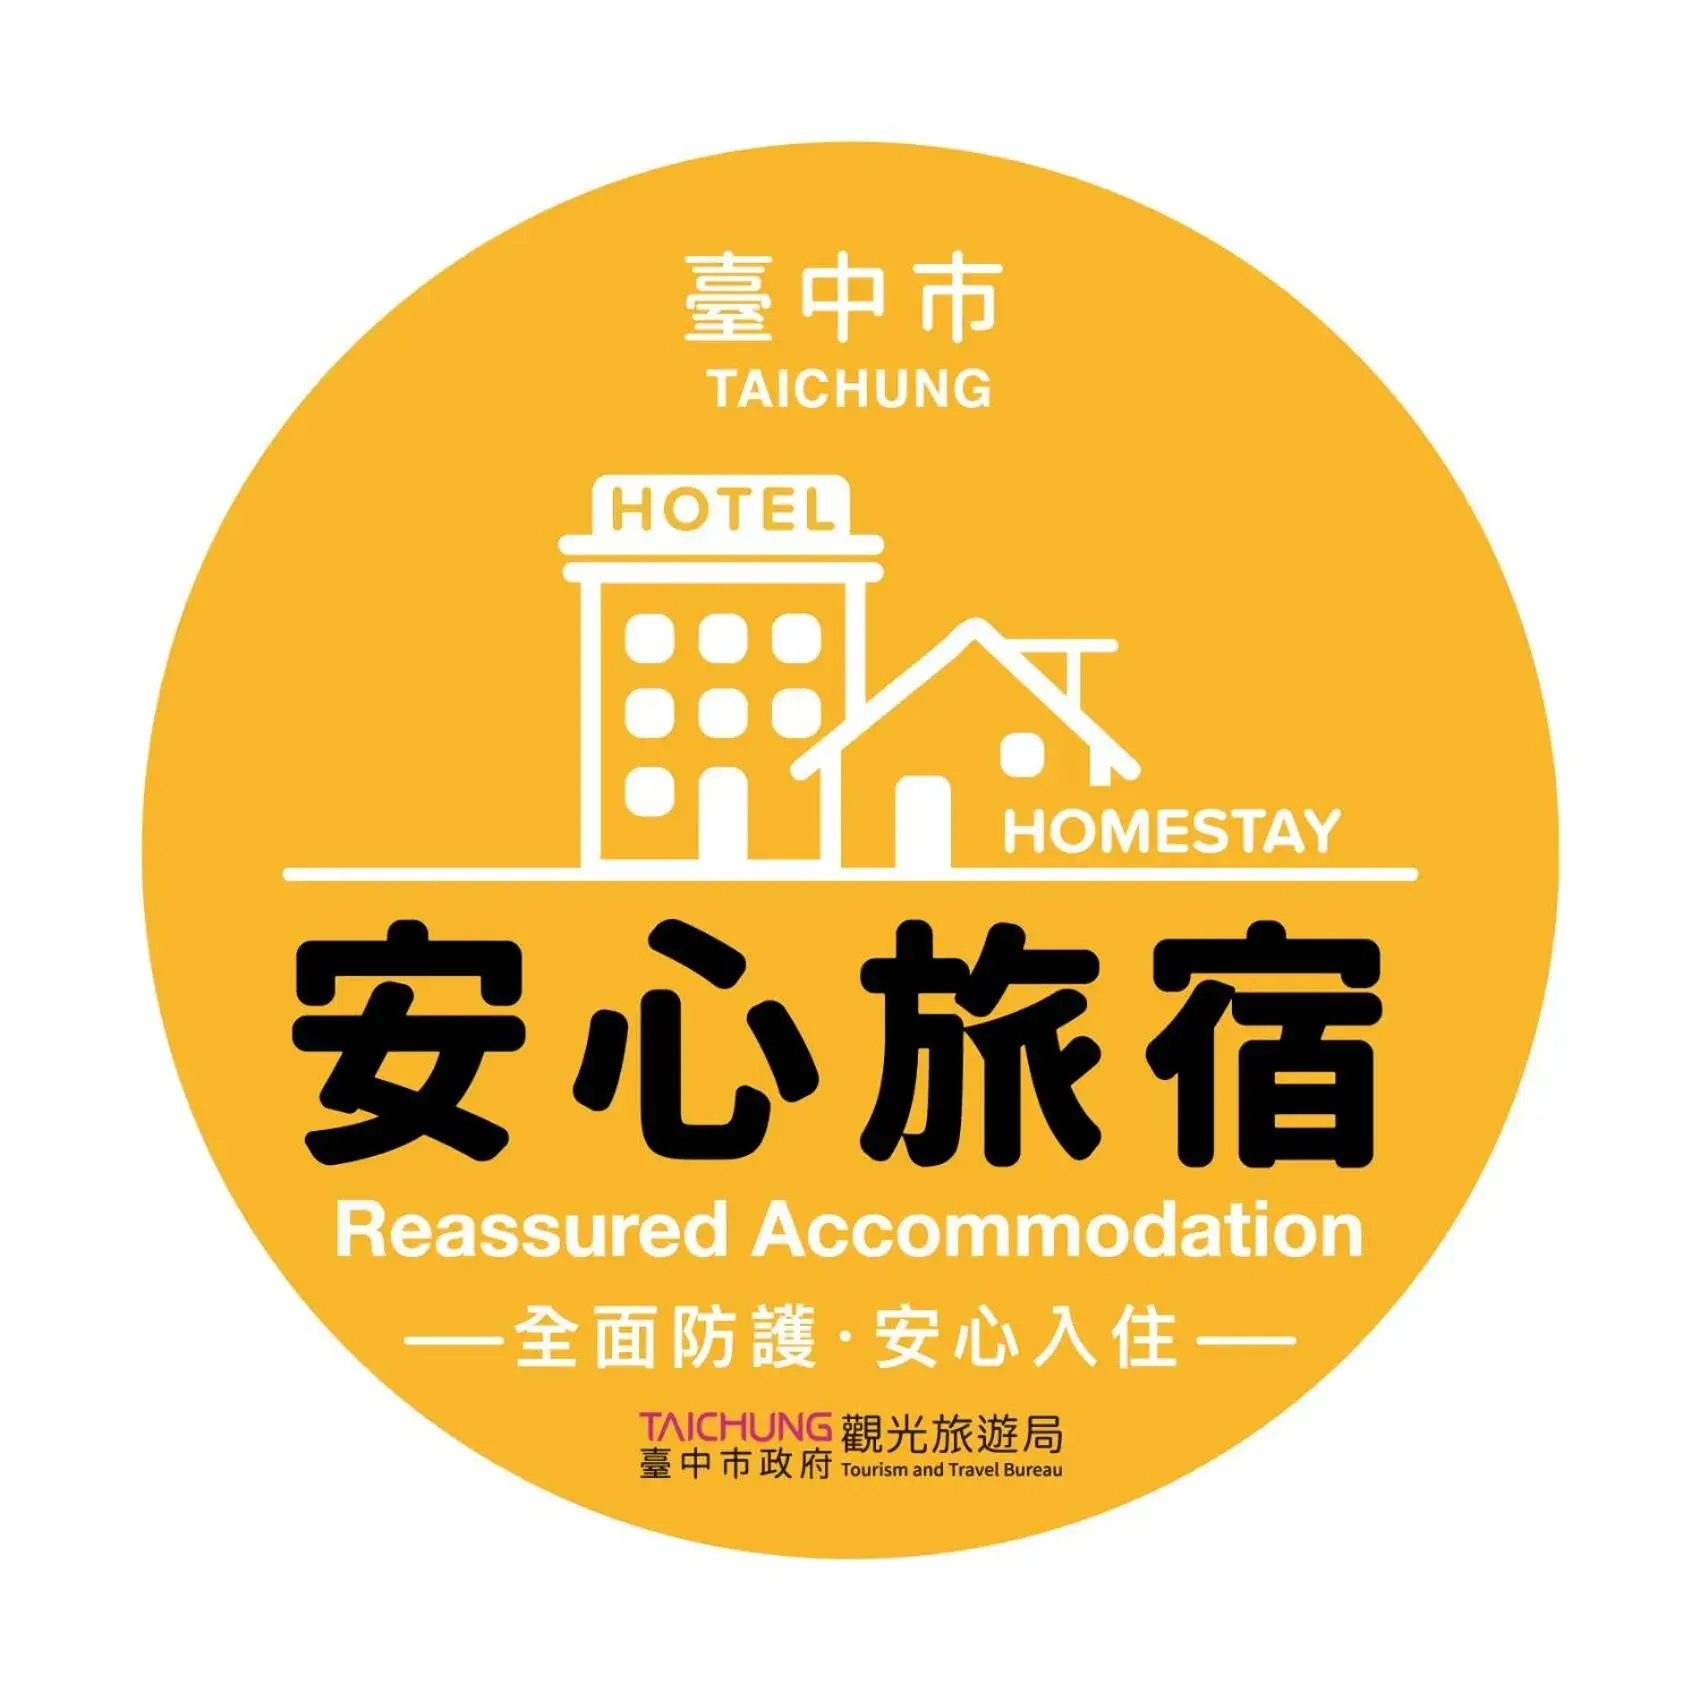 Logo/Certificate/Sign in Yuan Chyau Motel